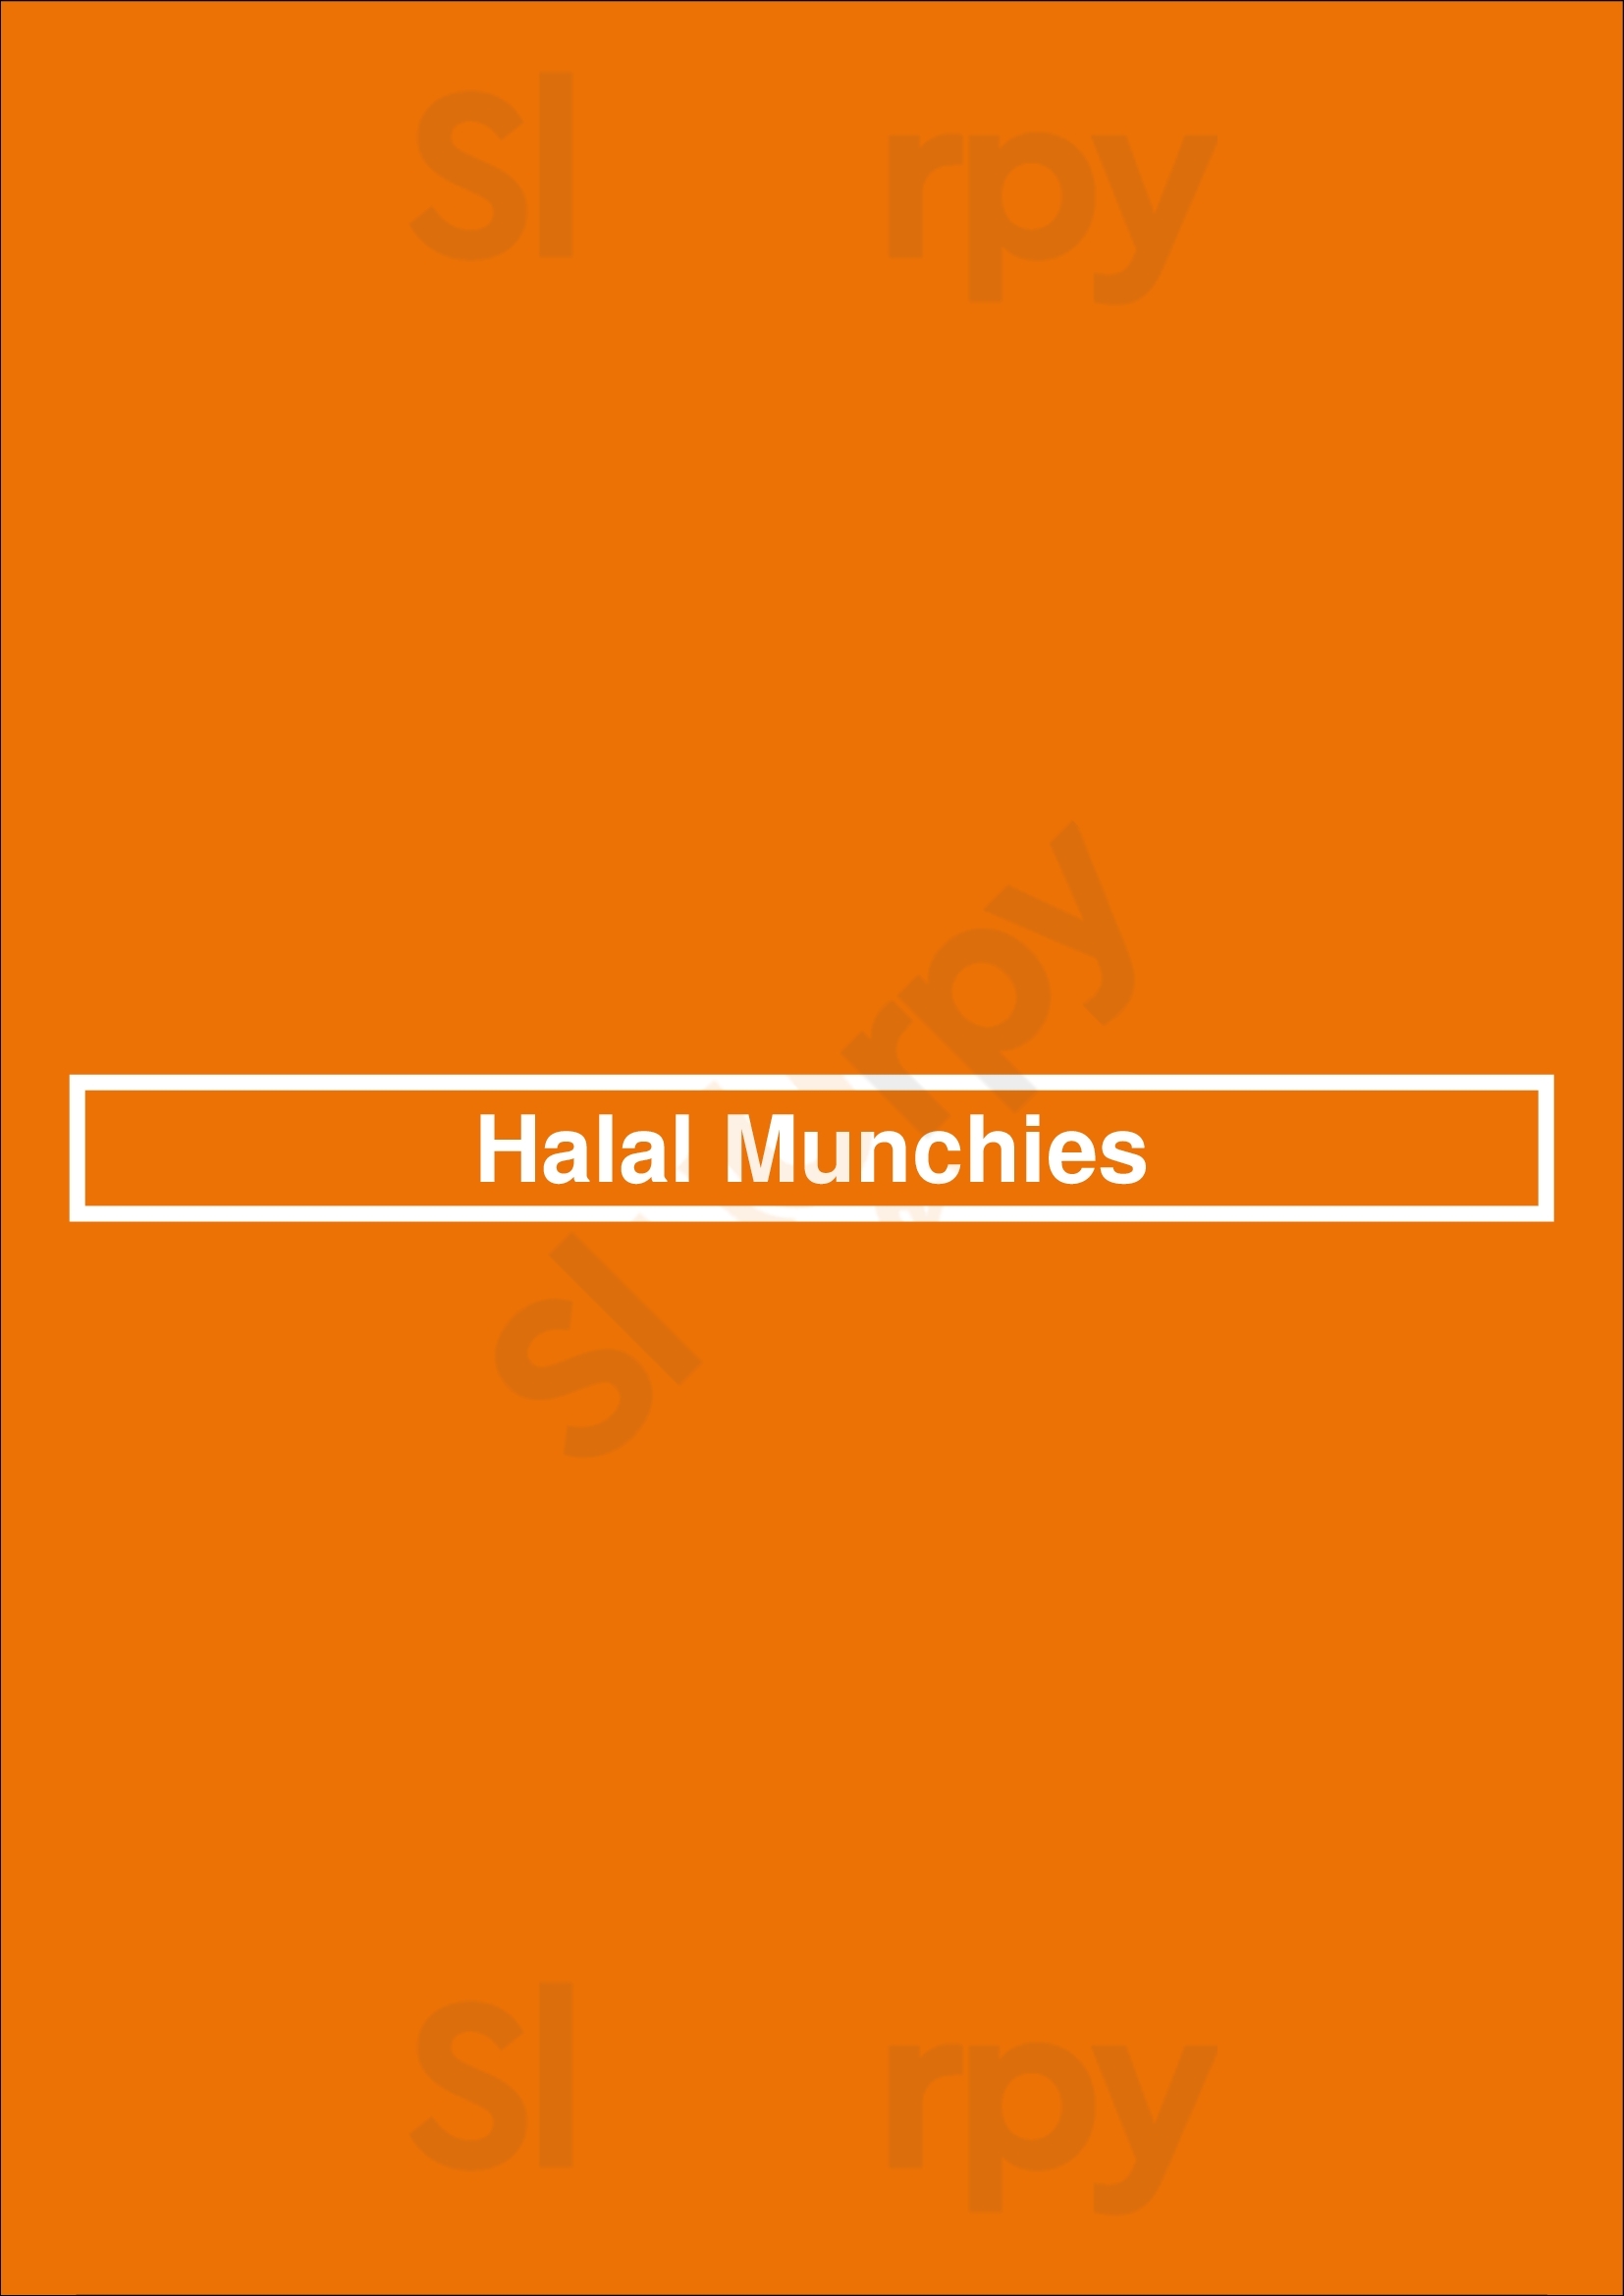 Halal Munchies Astoria Menu - 1